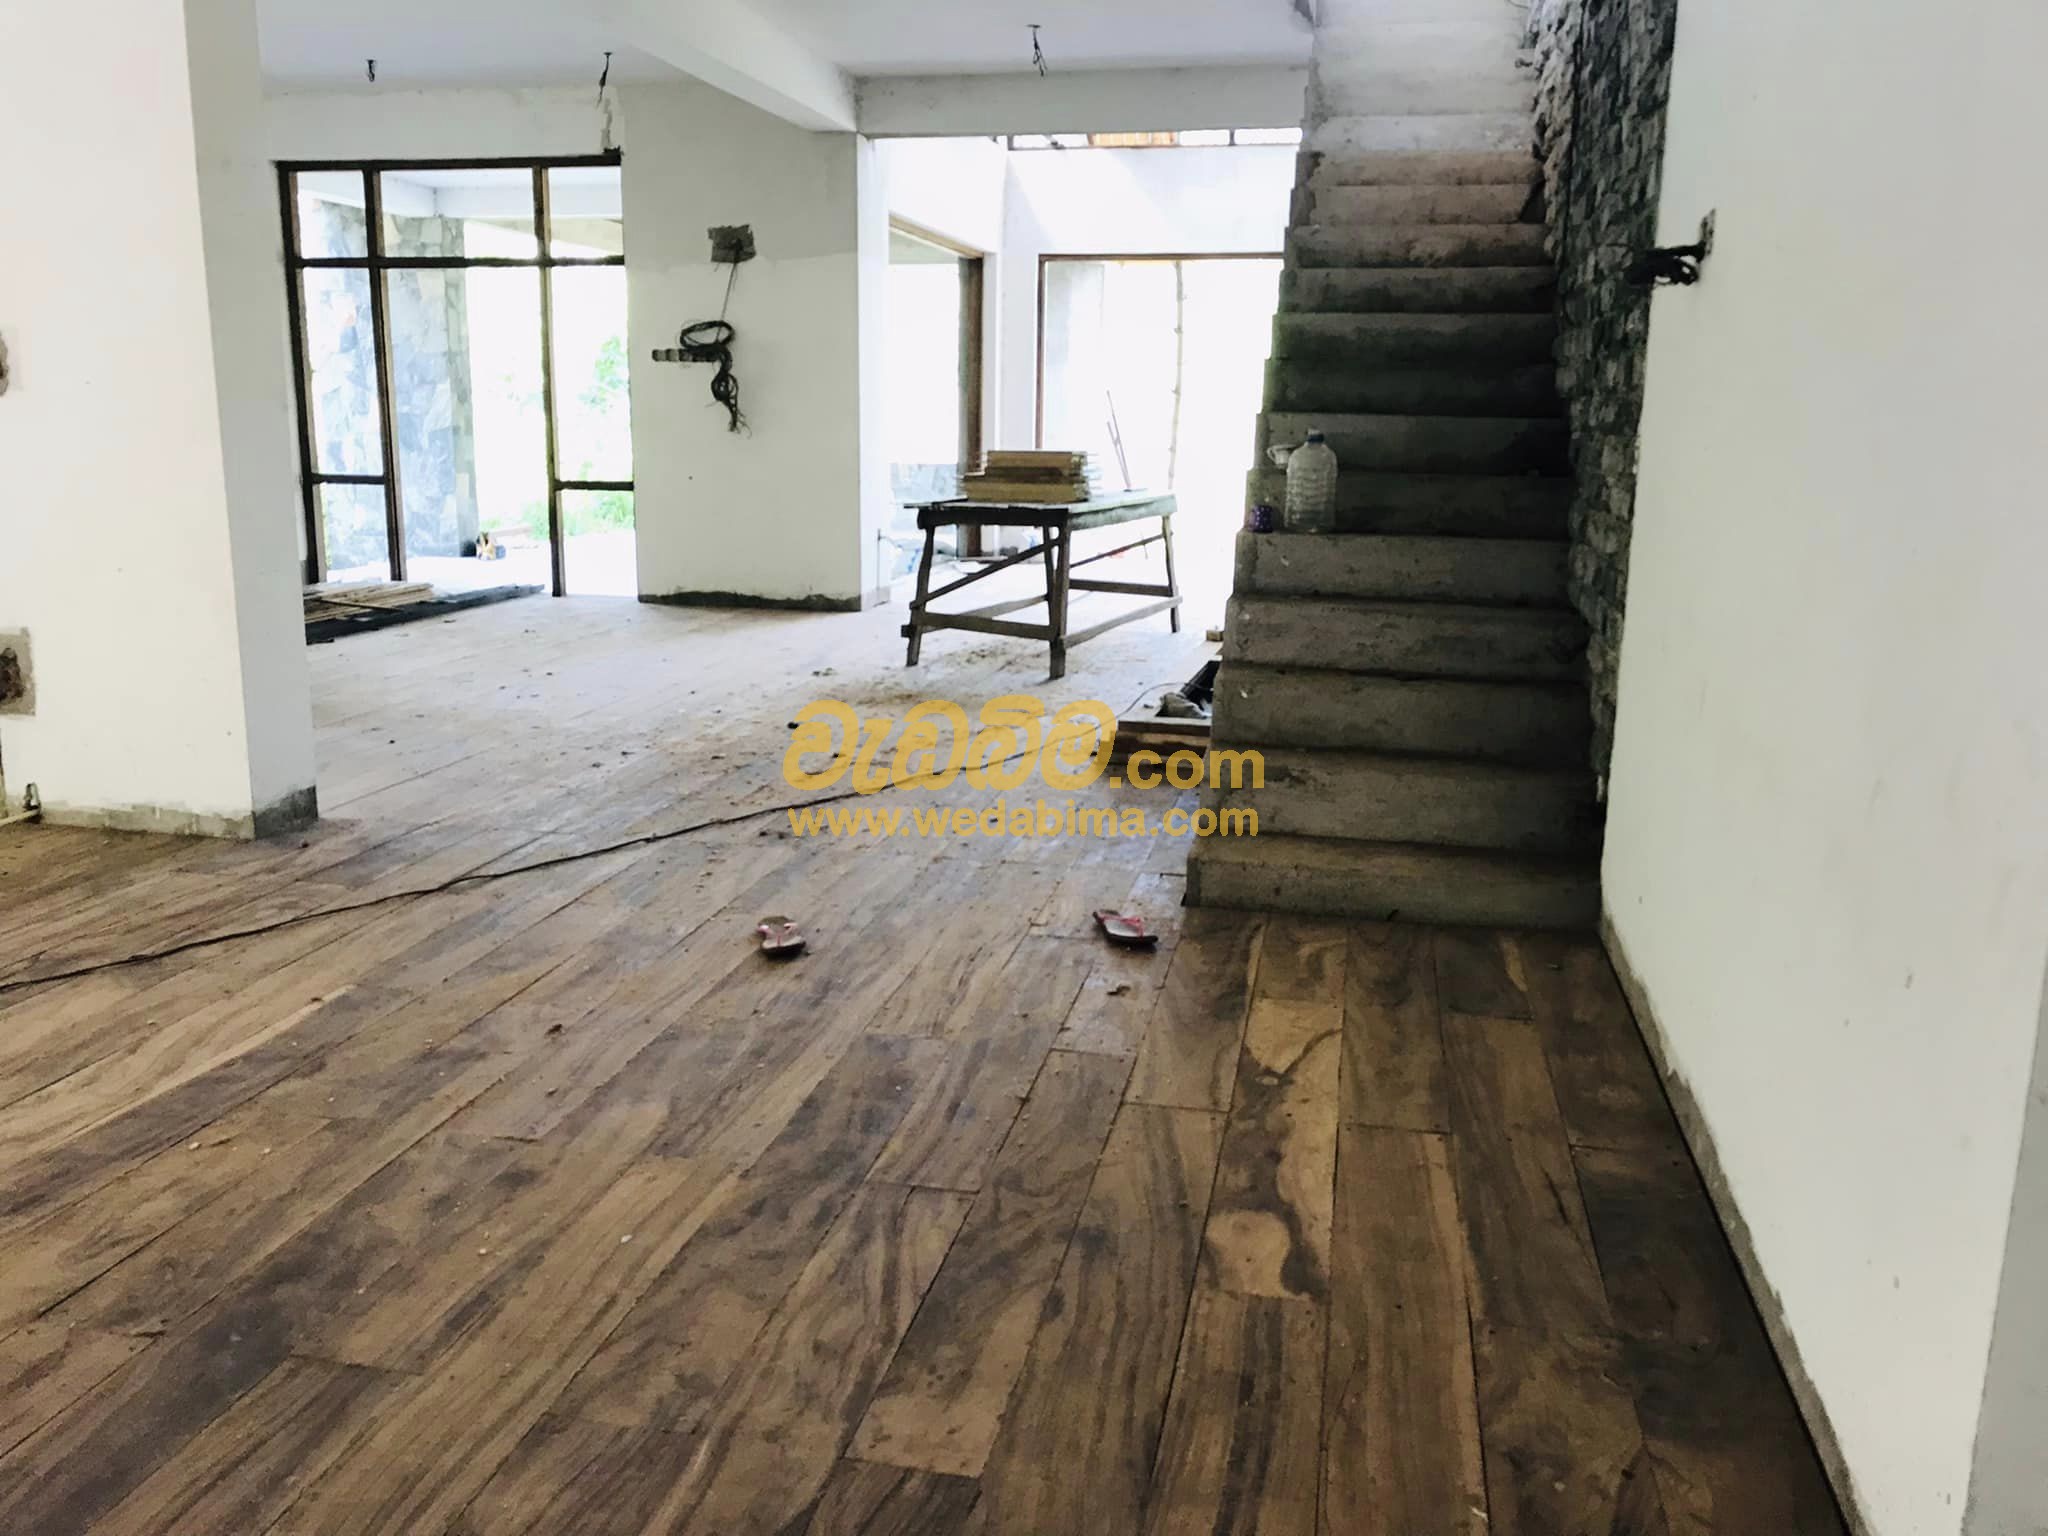 Wooden Flooring Price In Sri Lanka